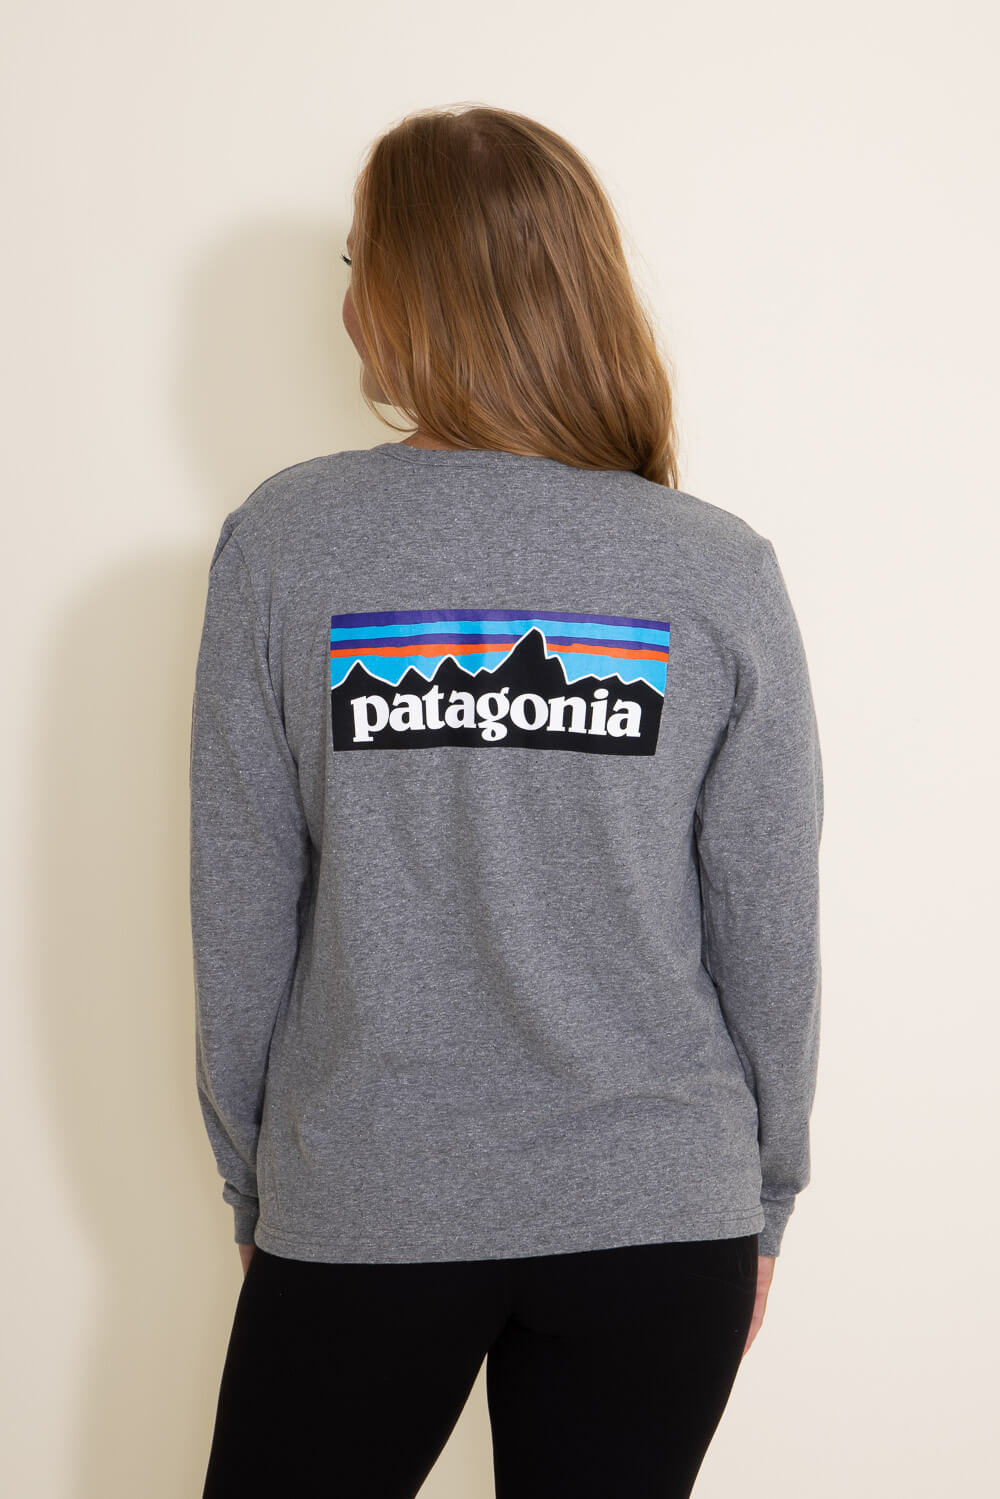 Patagonia Women's Long Sleeve P-6 Logo Responsibili-Tee in Heather